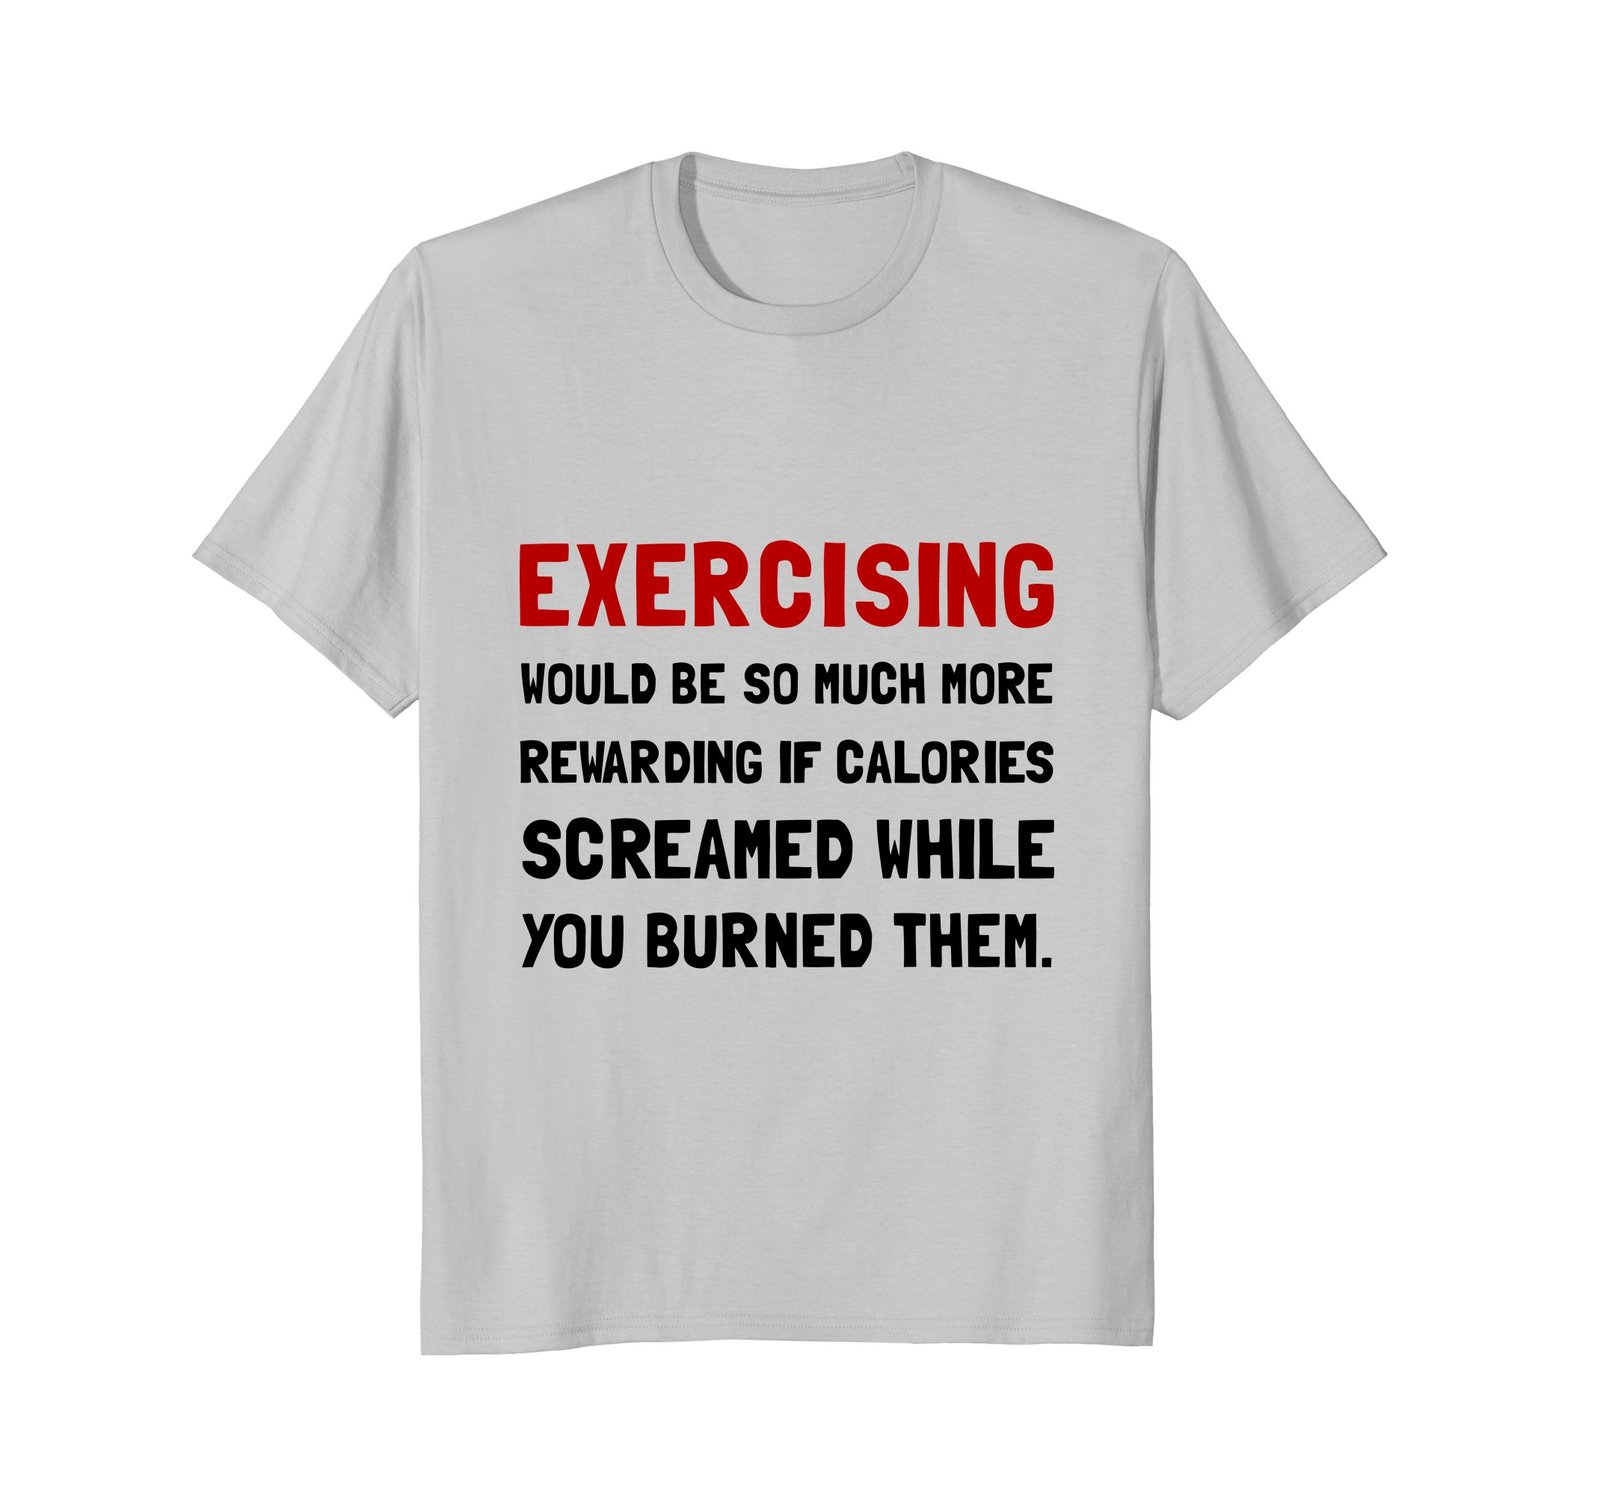 Funny Shirts - Exercising Calories Screamed Funny T-Shirt Men